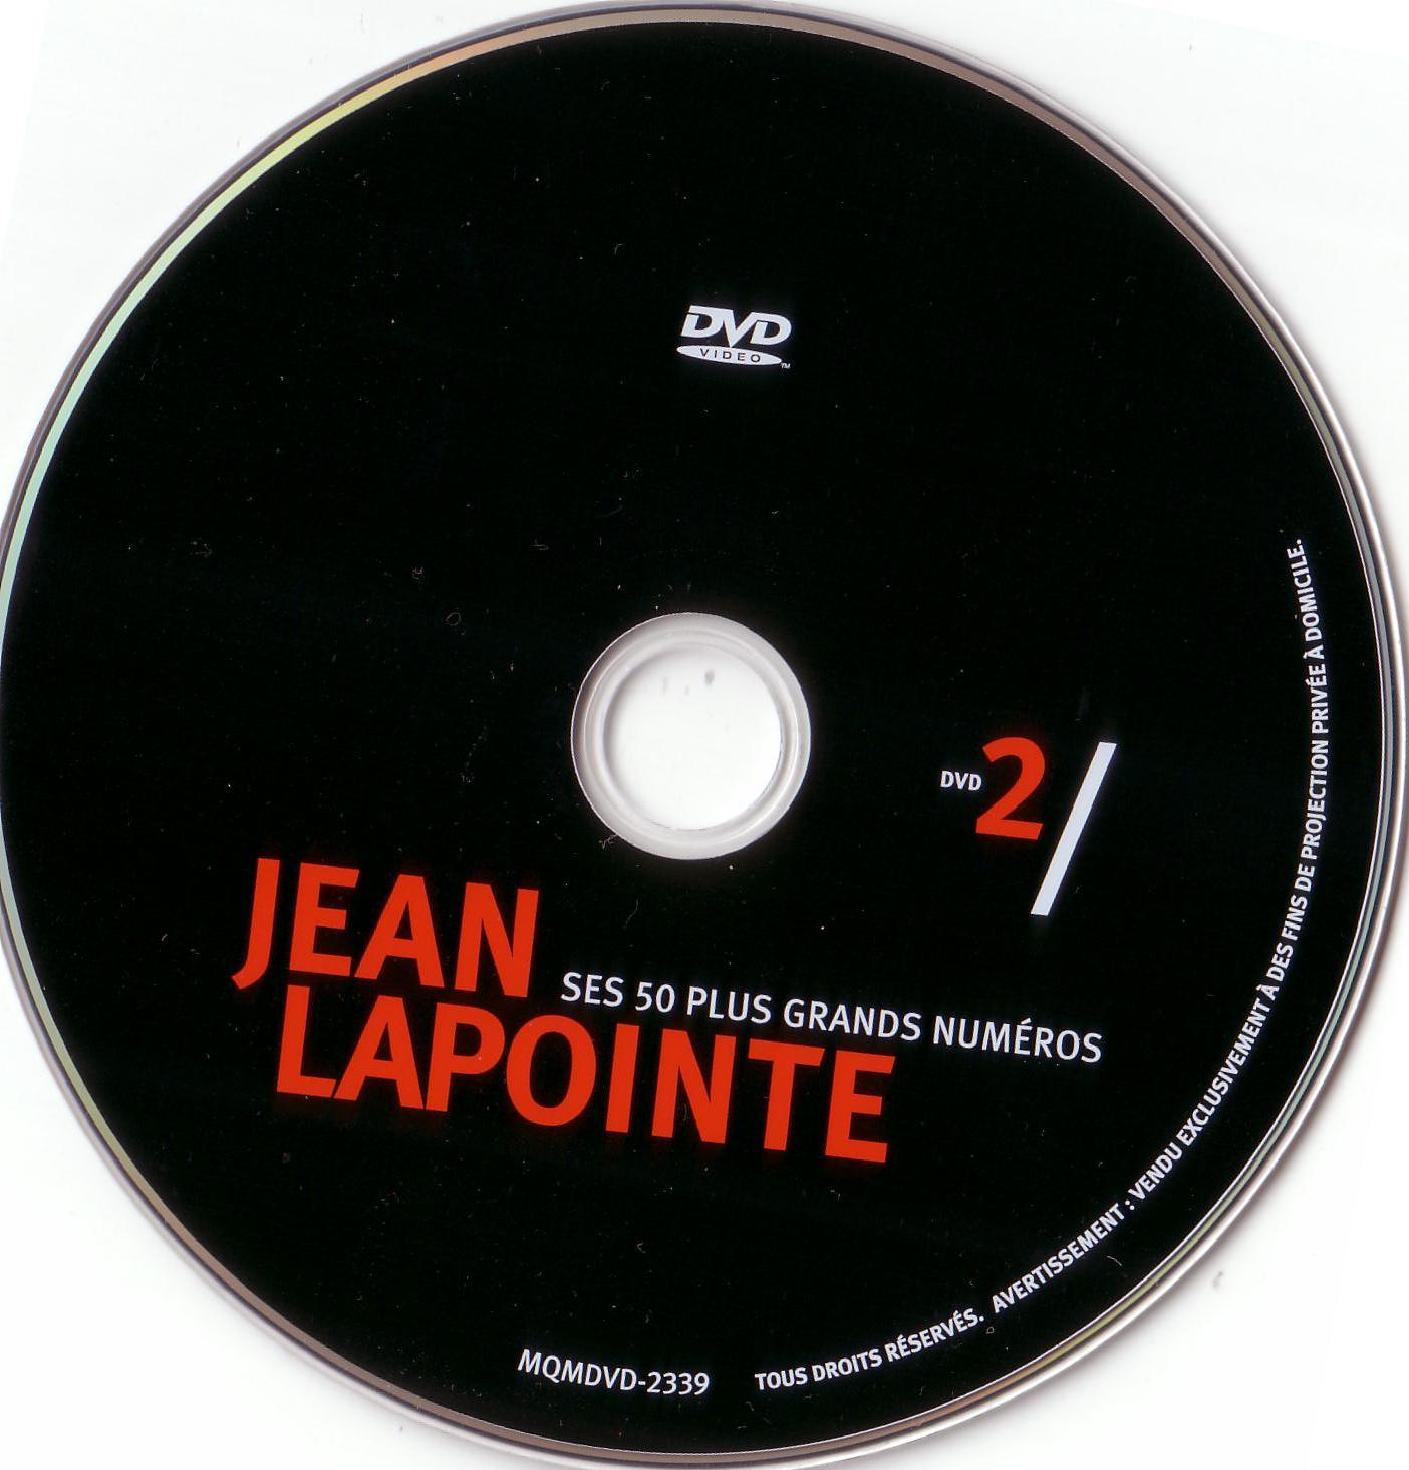 Jean Lapointe disc 2